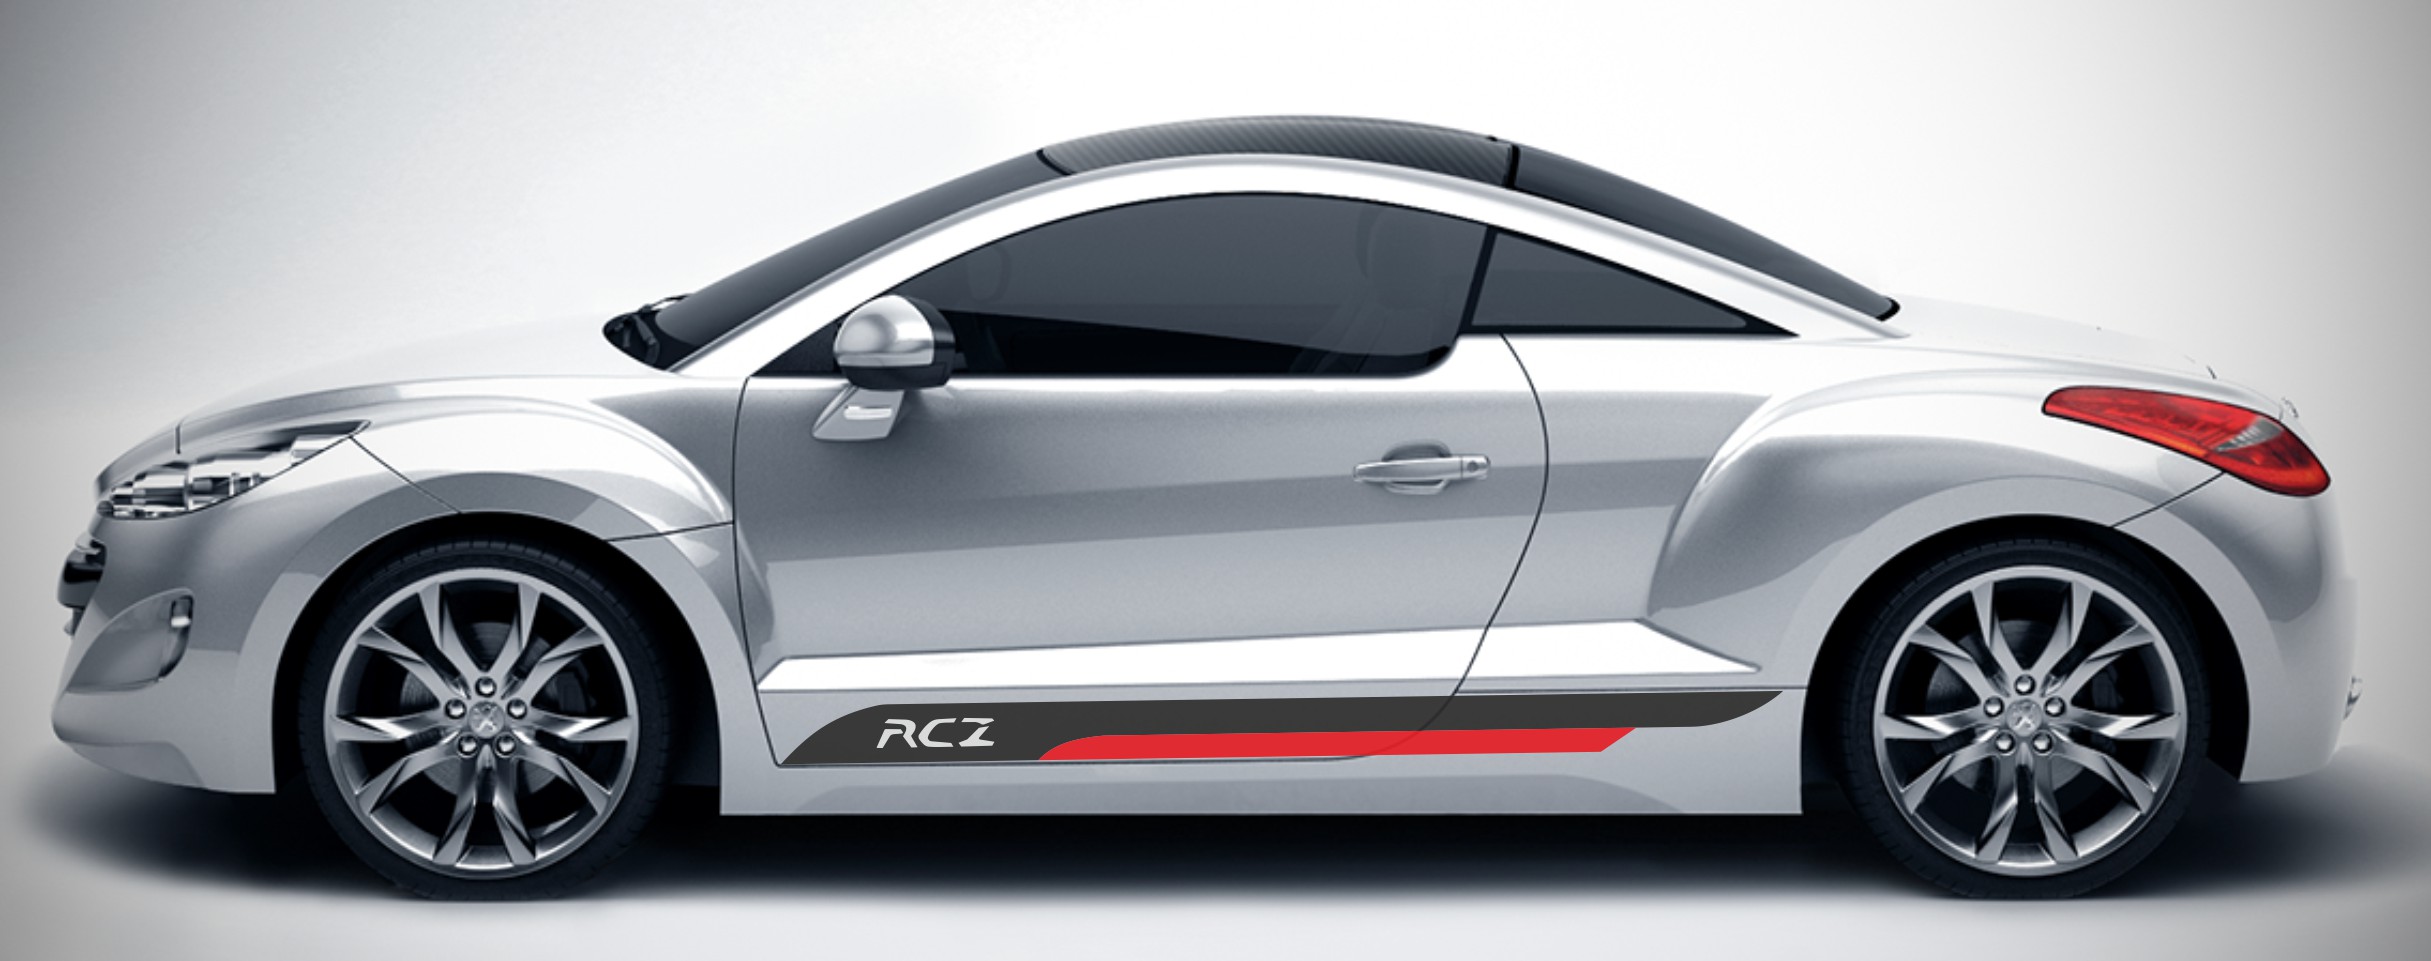 Peugeot RCZ naklejki decals stripes sticker aufkleber nalepky samolepky tuning